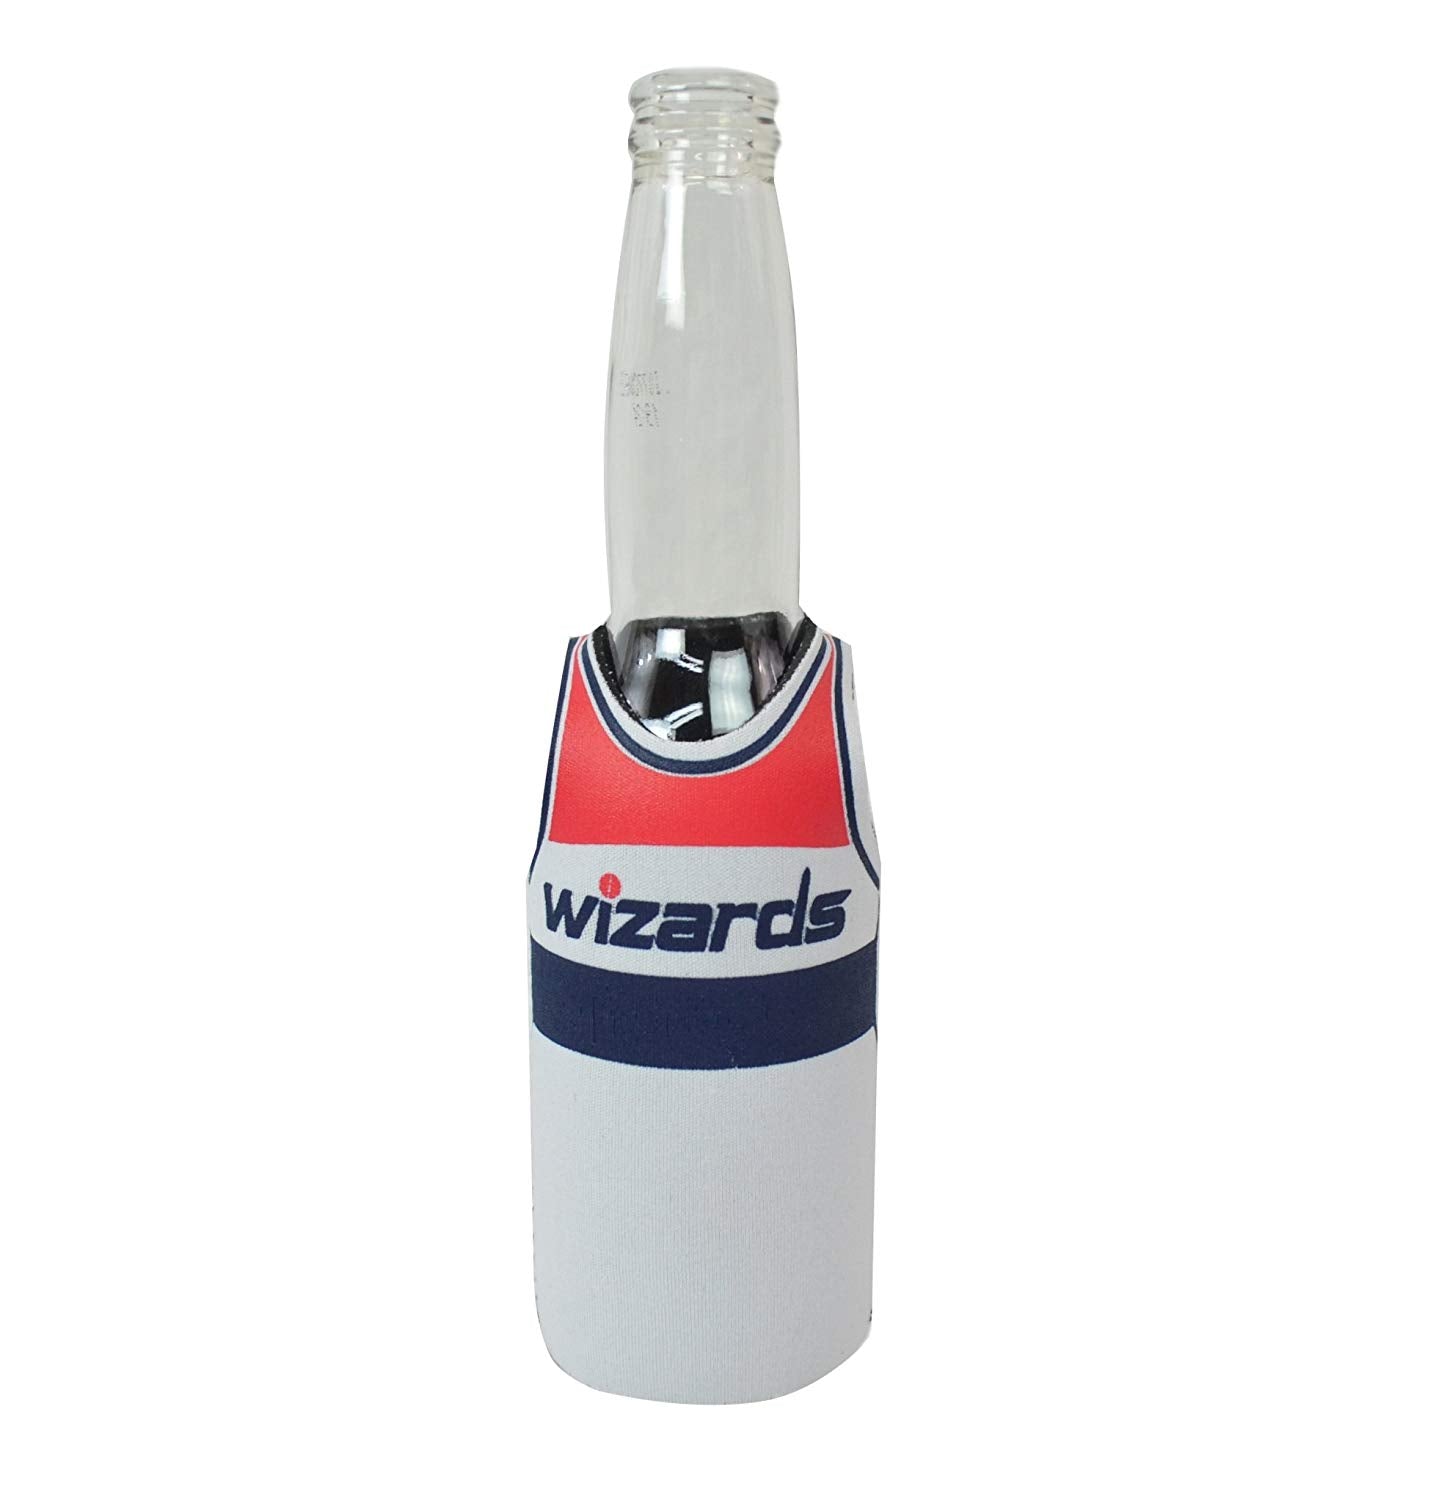 Official National Basketball Association Fan Shop Authentic NBA Insulated Bottle Team Jersey Cooler